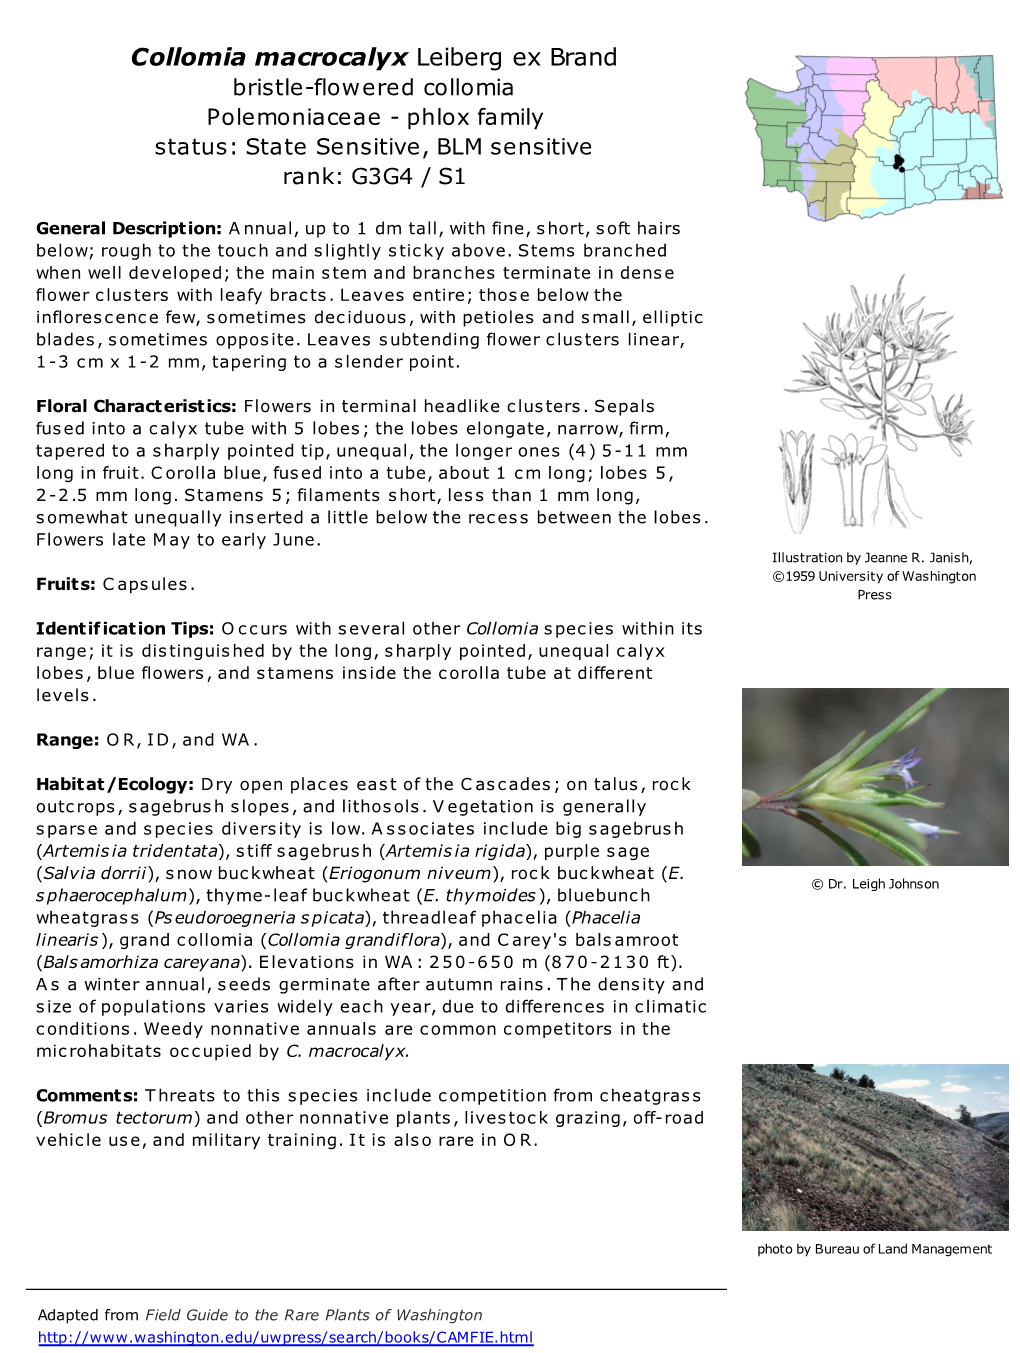 Collomia Macrocalyx Leiberg Ex Brand Bristle-Flowered Collomia Polemoniaceae - Phlox Family Status: State Sensitive, BLM Sensitive Rank: G3G4 / S1